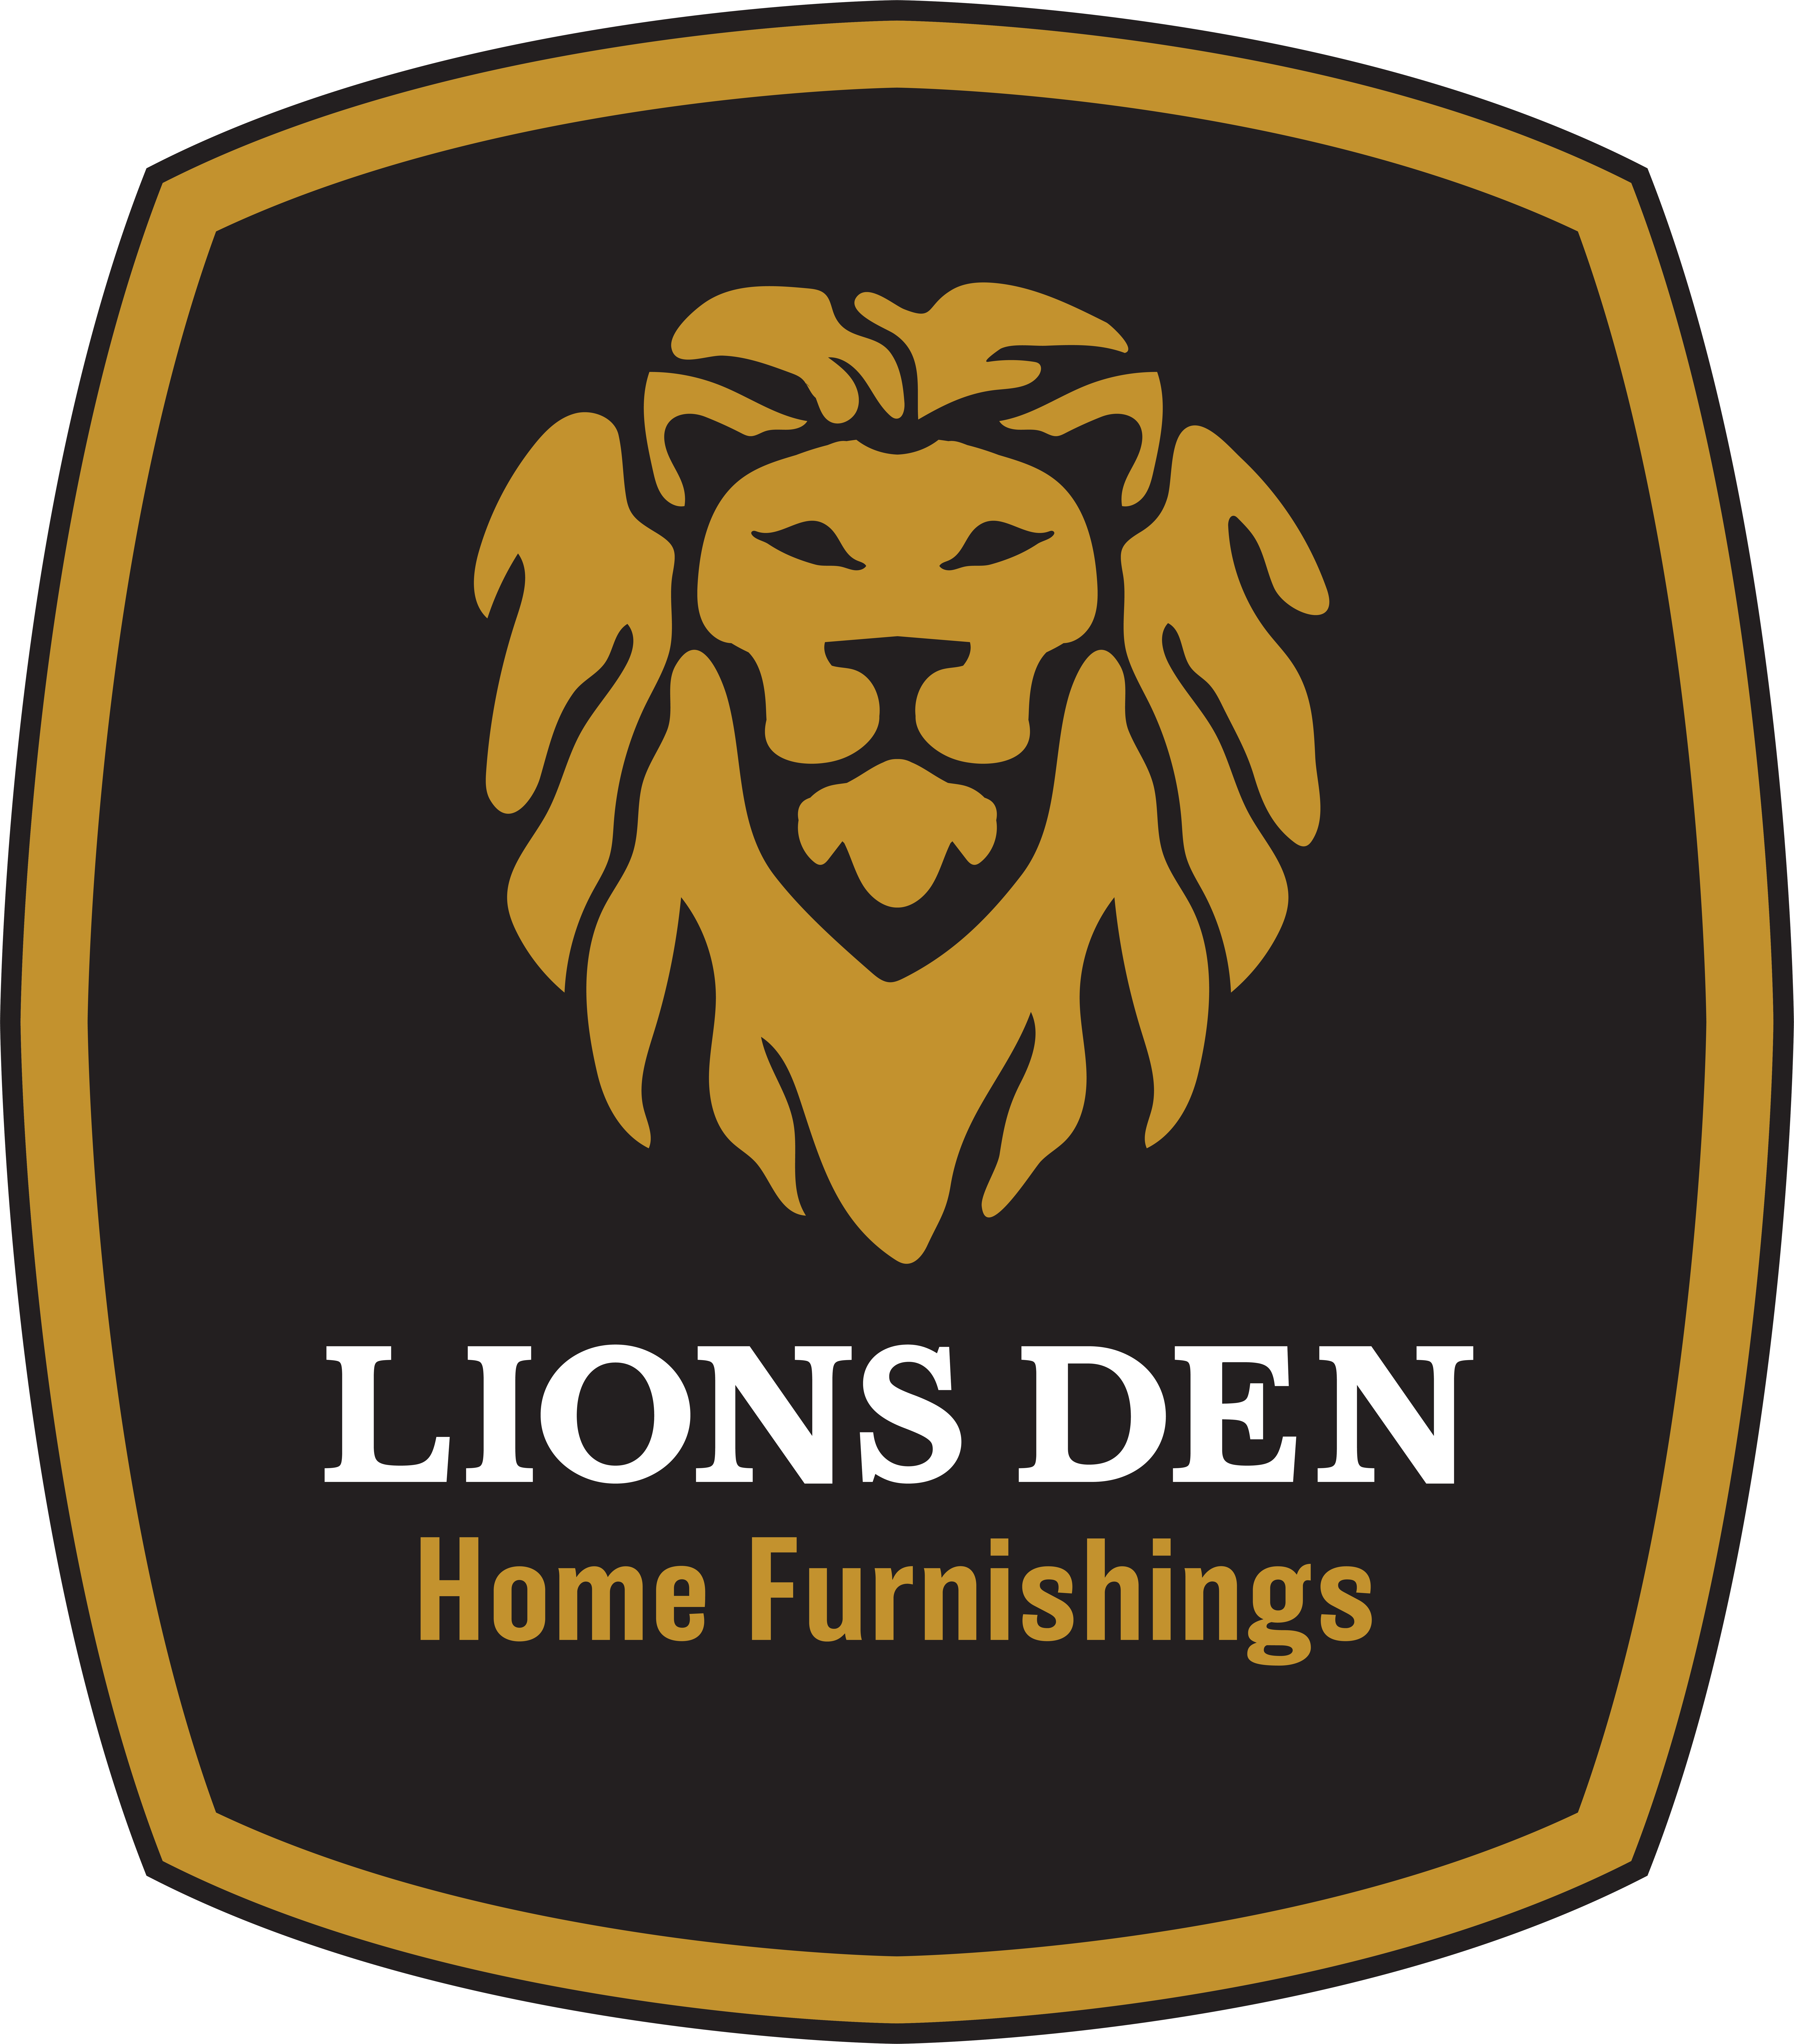 Lions Den Home Furnishings - Logo Design by Rachel Lynn Heisey Graphic Designer in Lancaster, PA and Web Designer